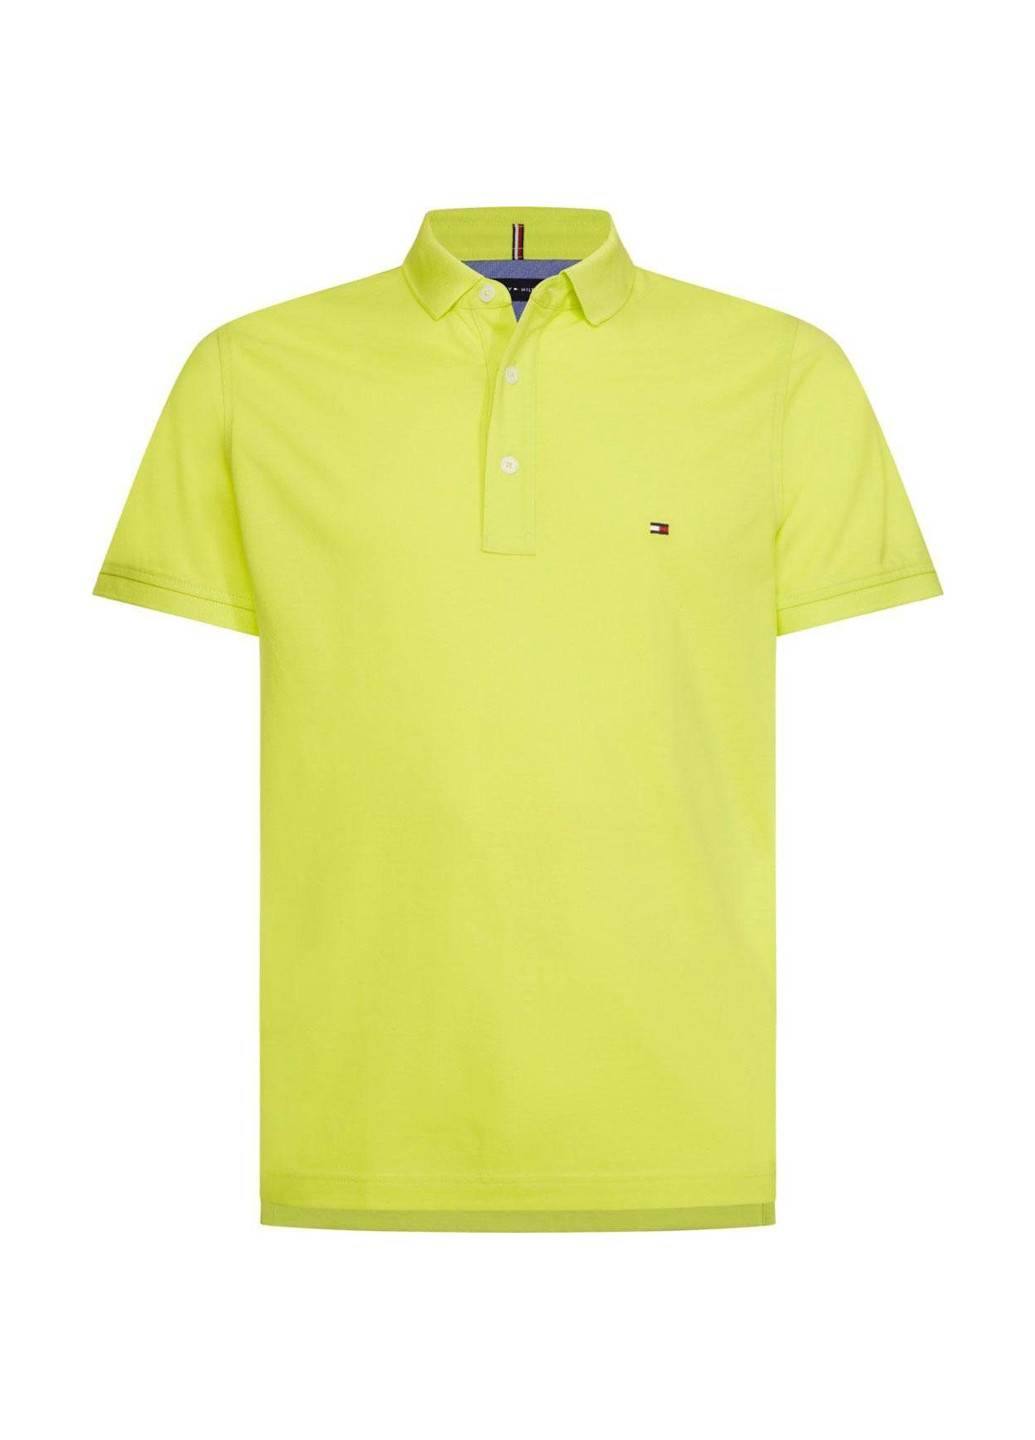 Желтая футболка-поло для мужчин Tommy Hilfiger с логотипом